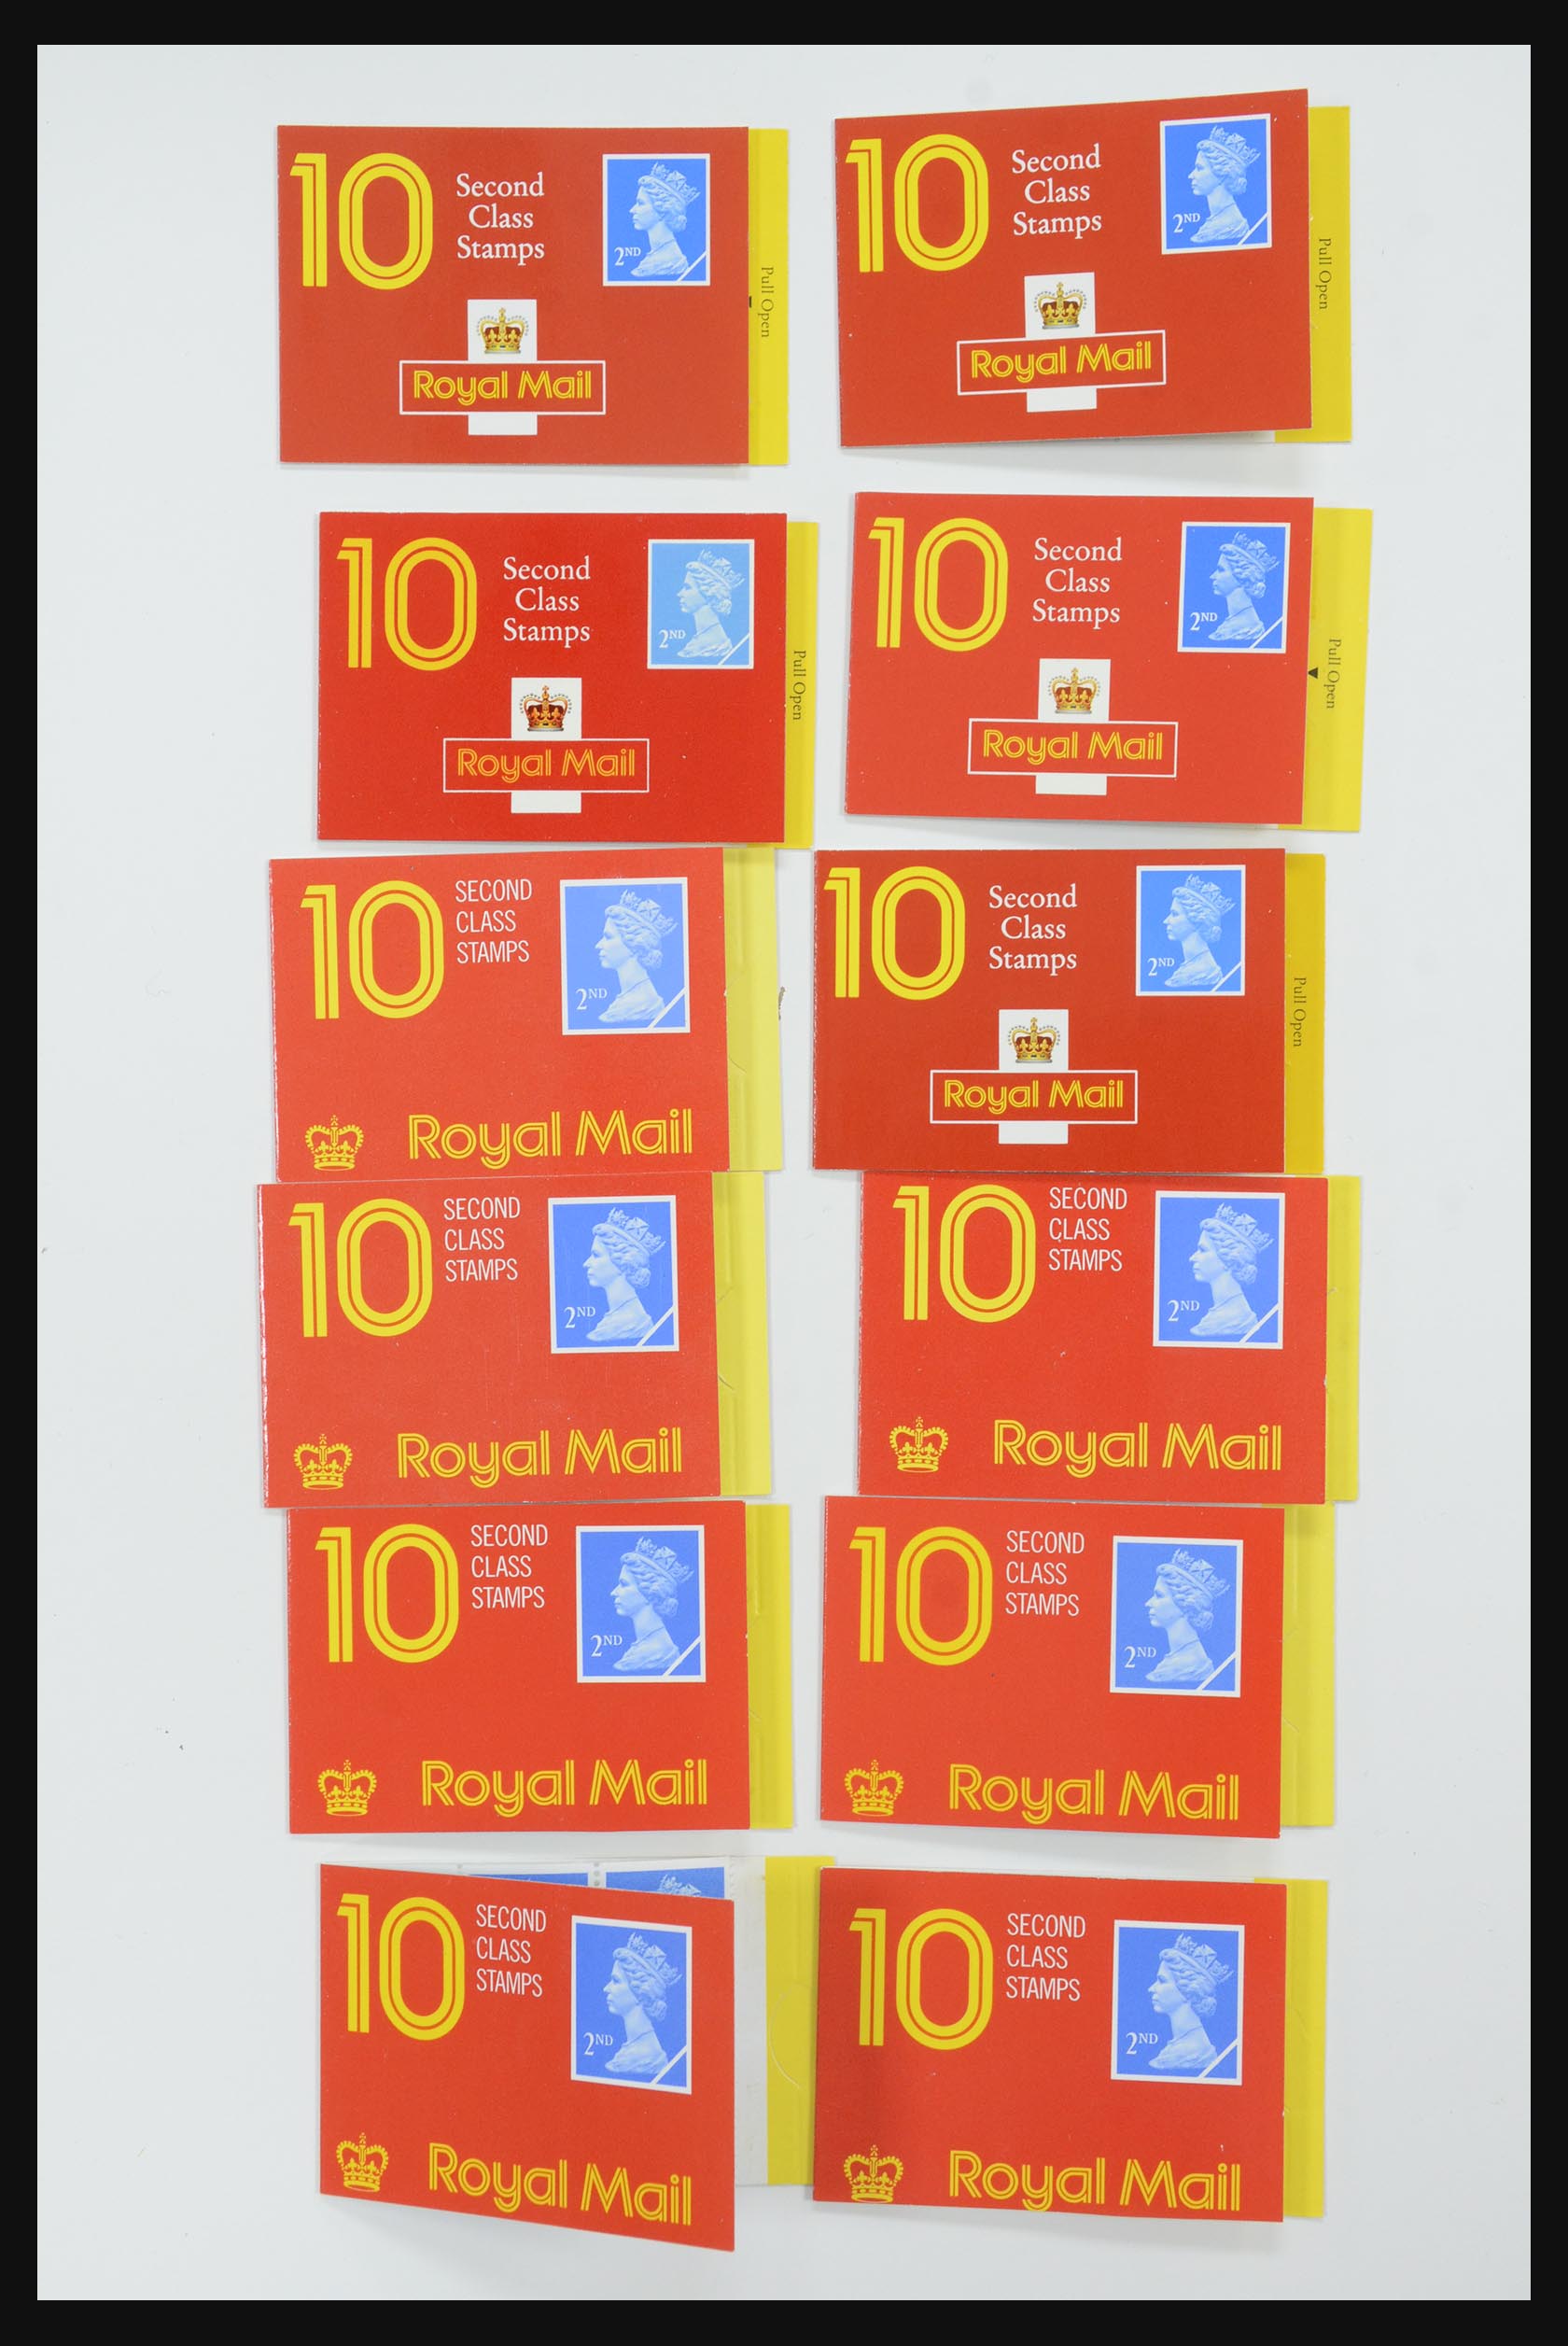 31961 048 - 31961 Great Britain stampbooklets 1971-1999.